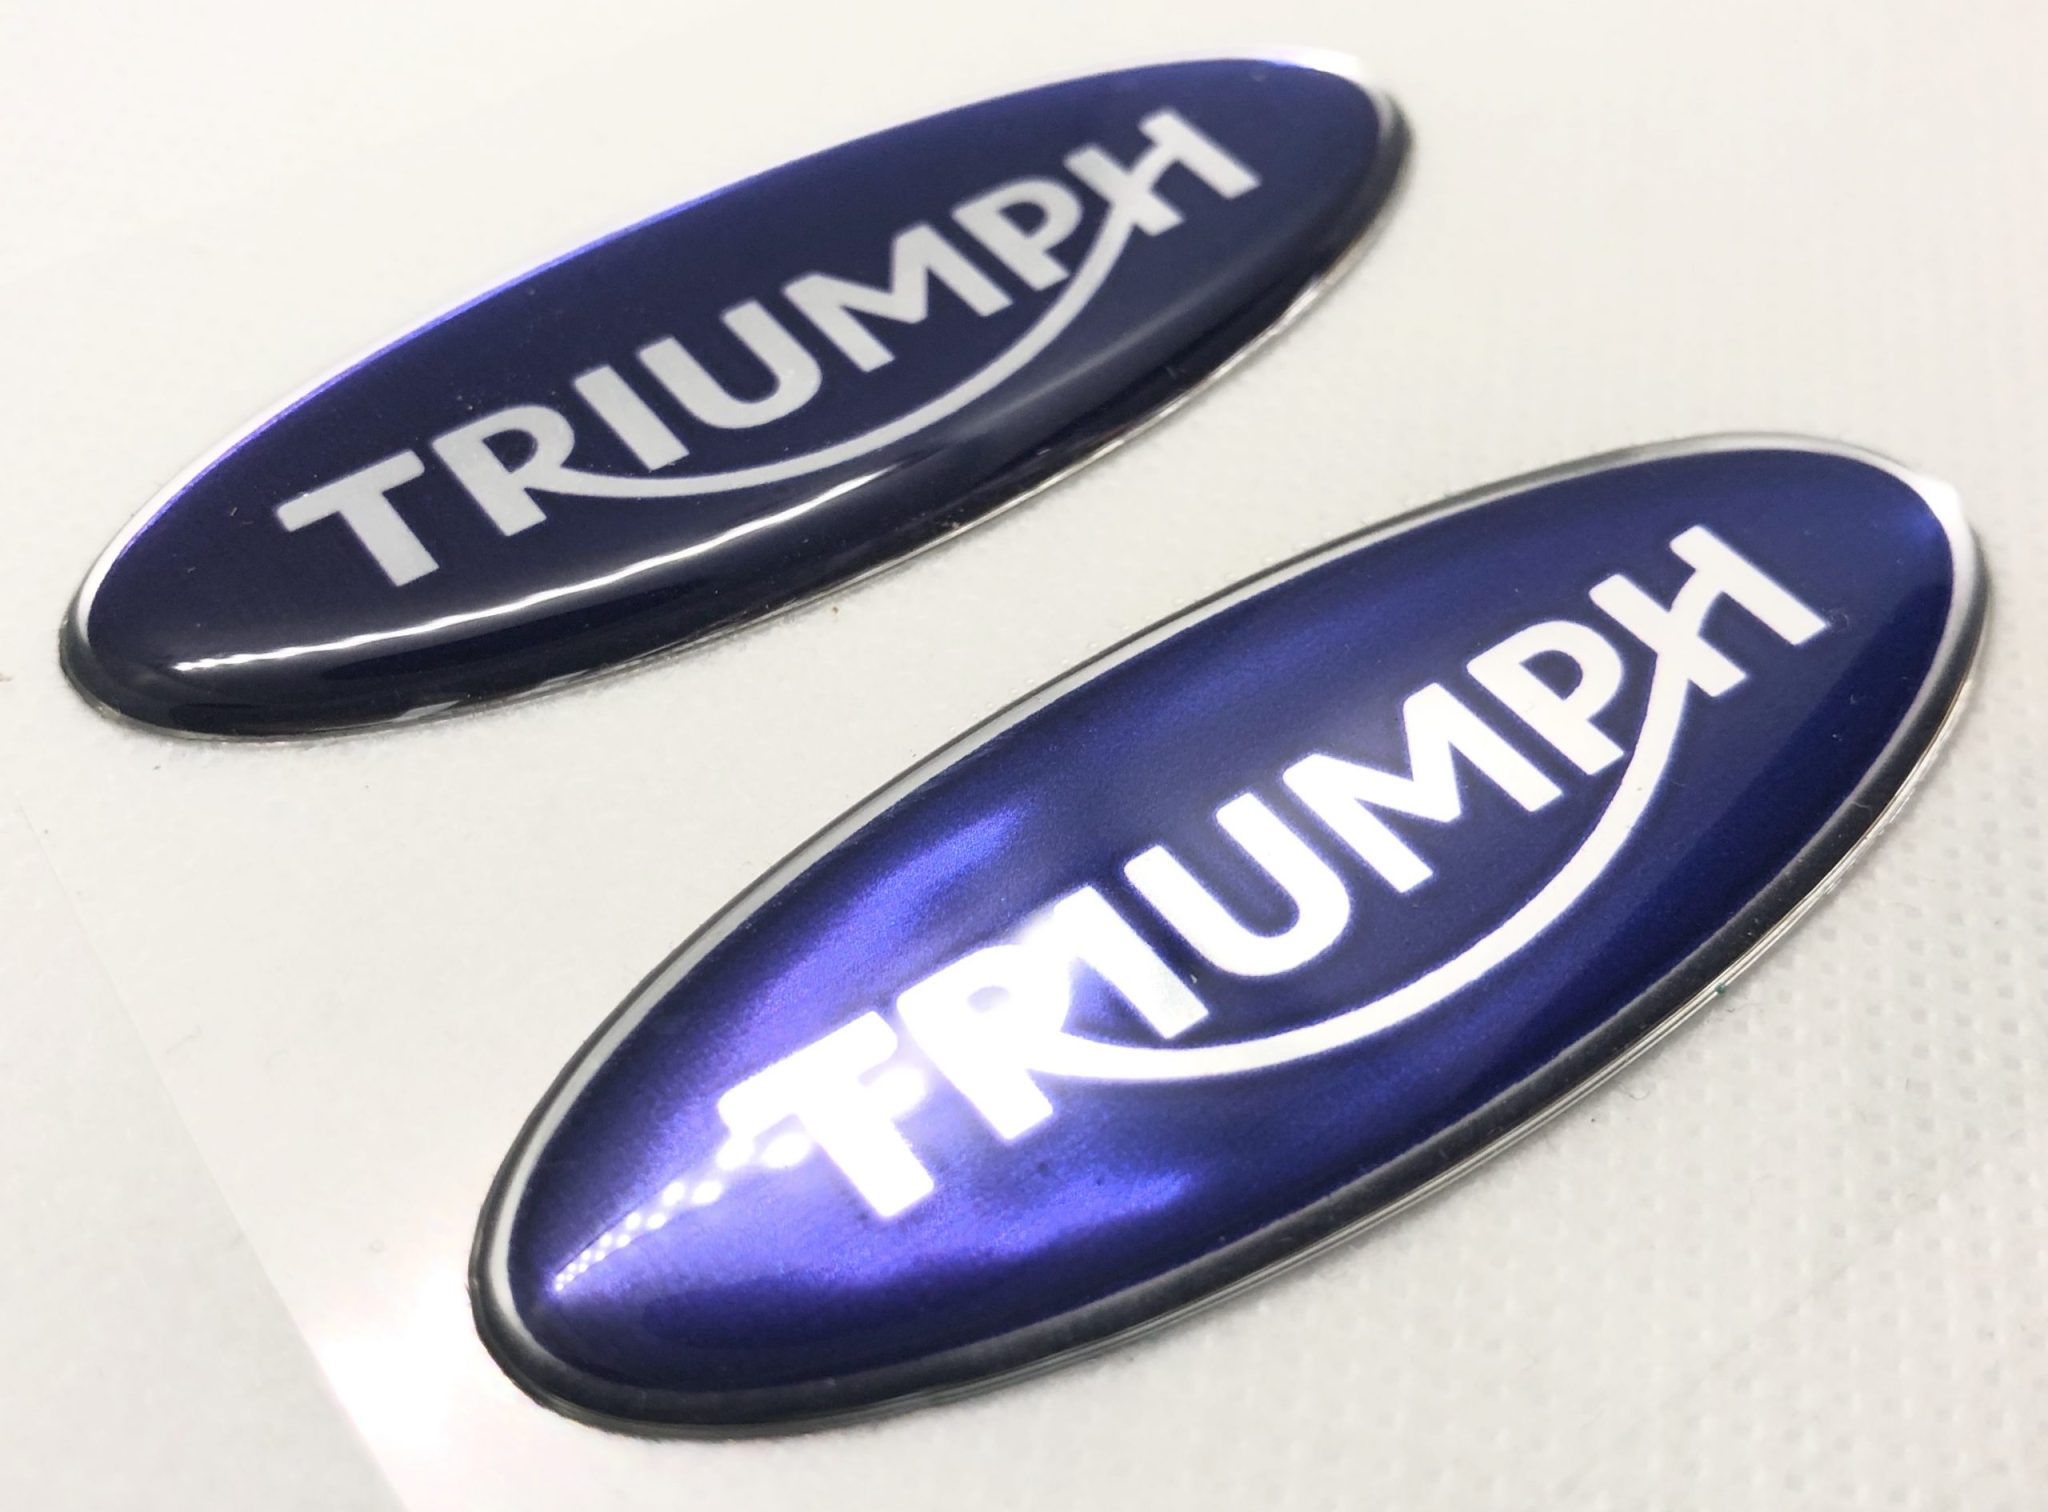 3D Triumph logo sticker